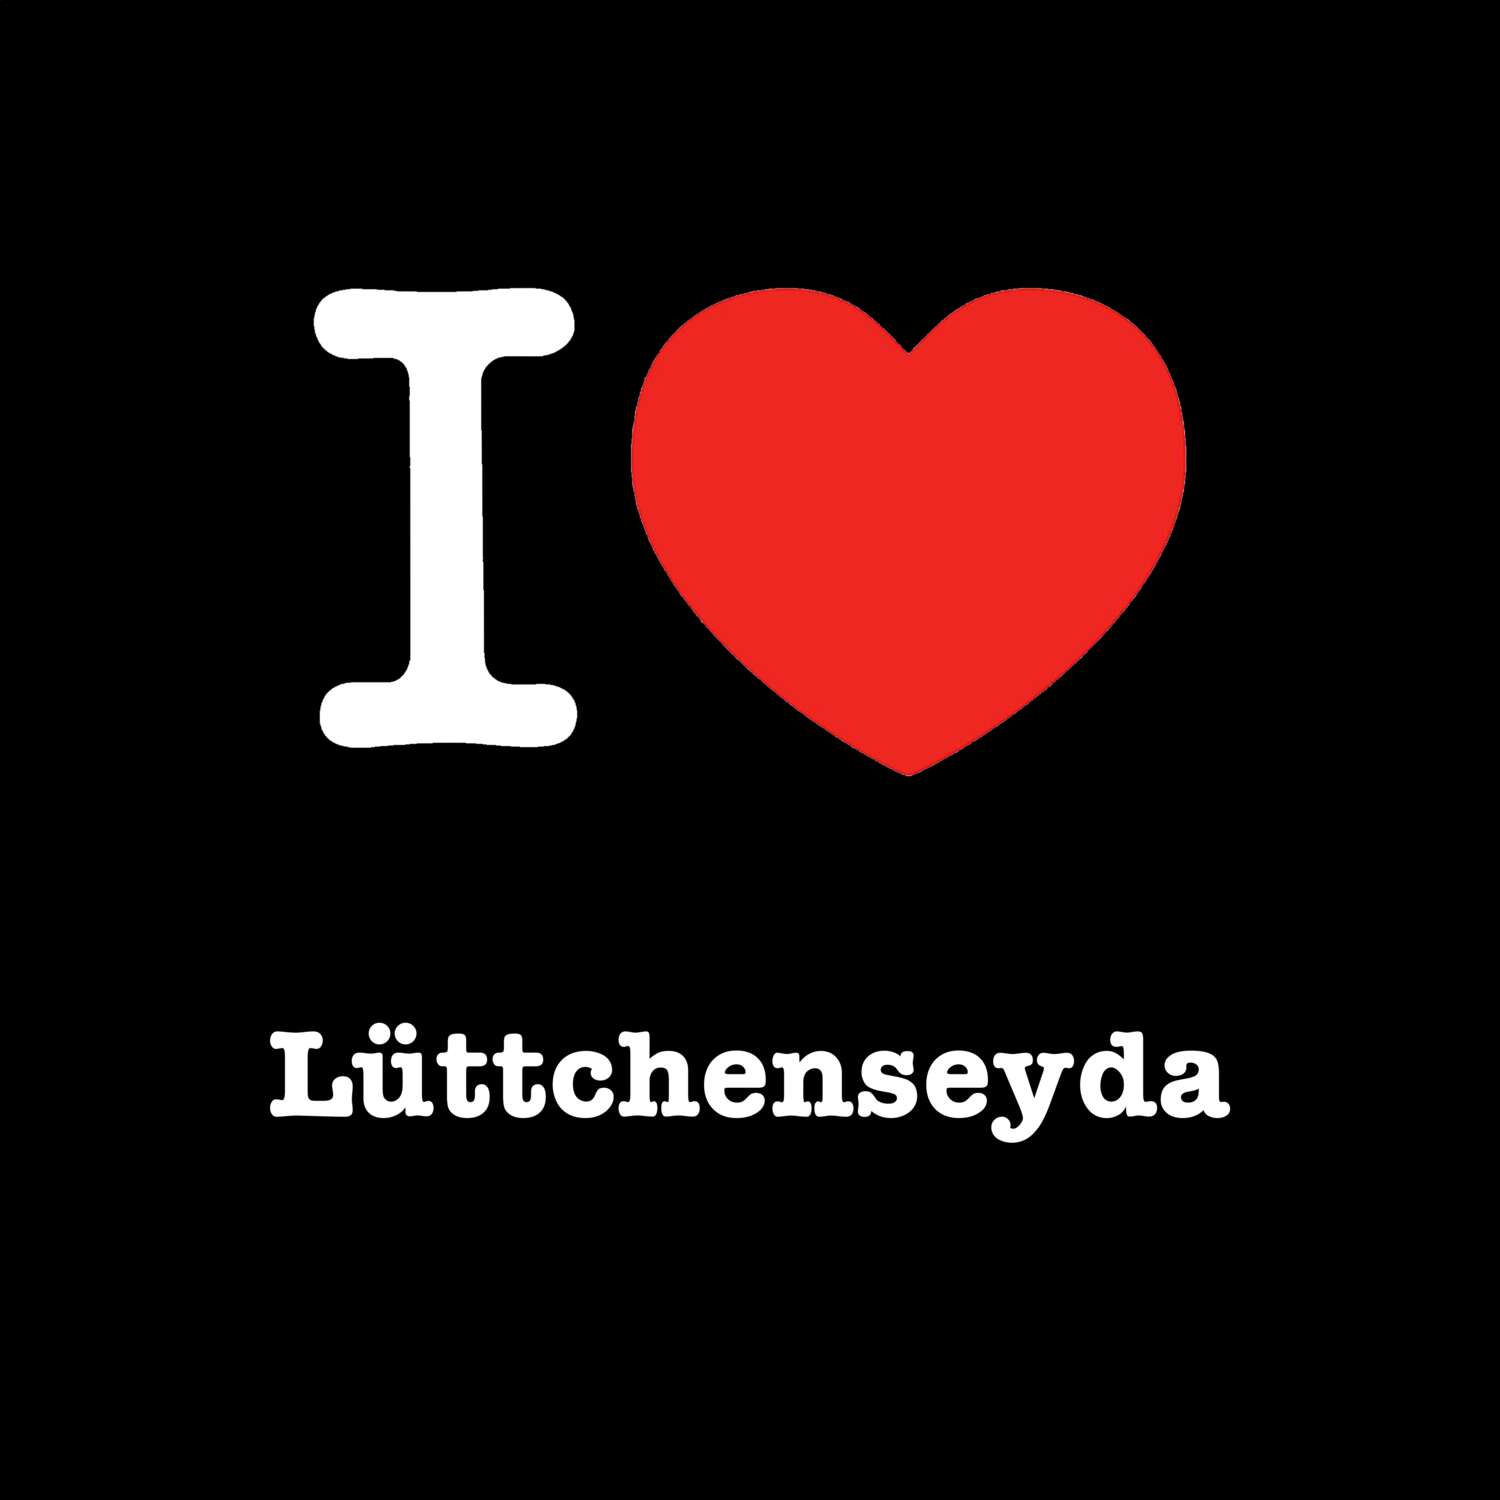 Lüttchenseyda T-Shirt »I love«